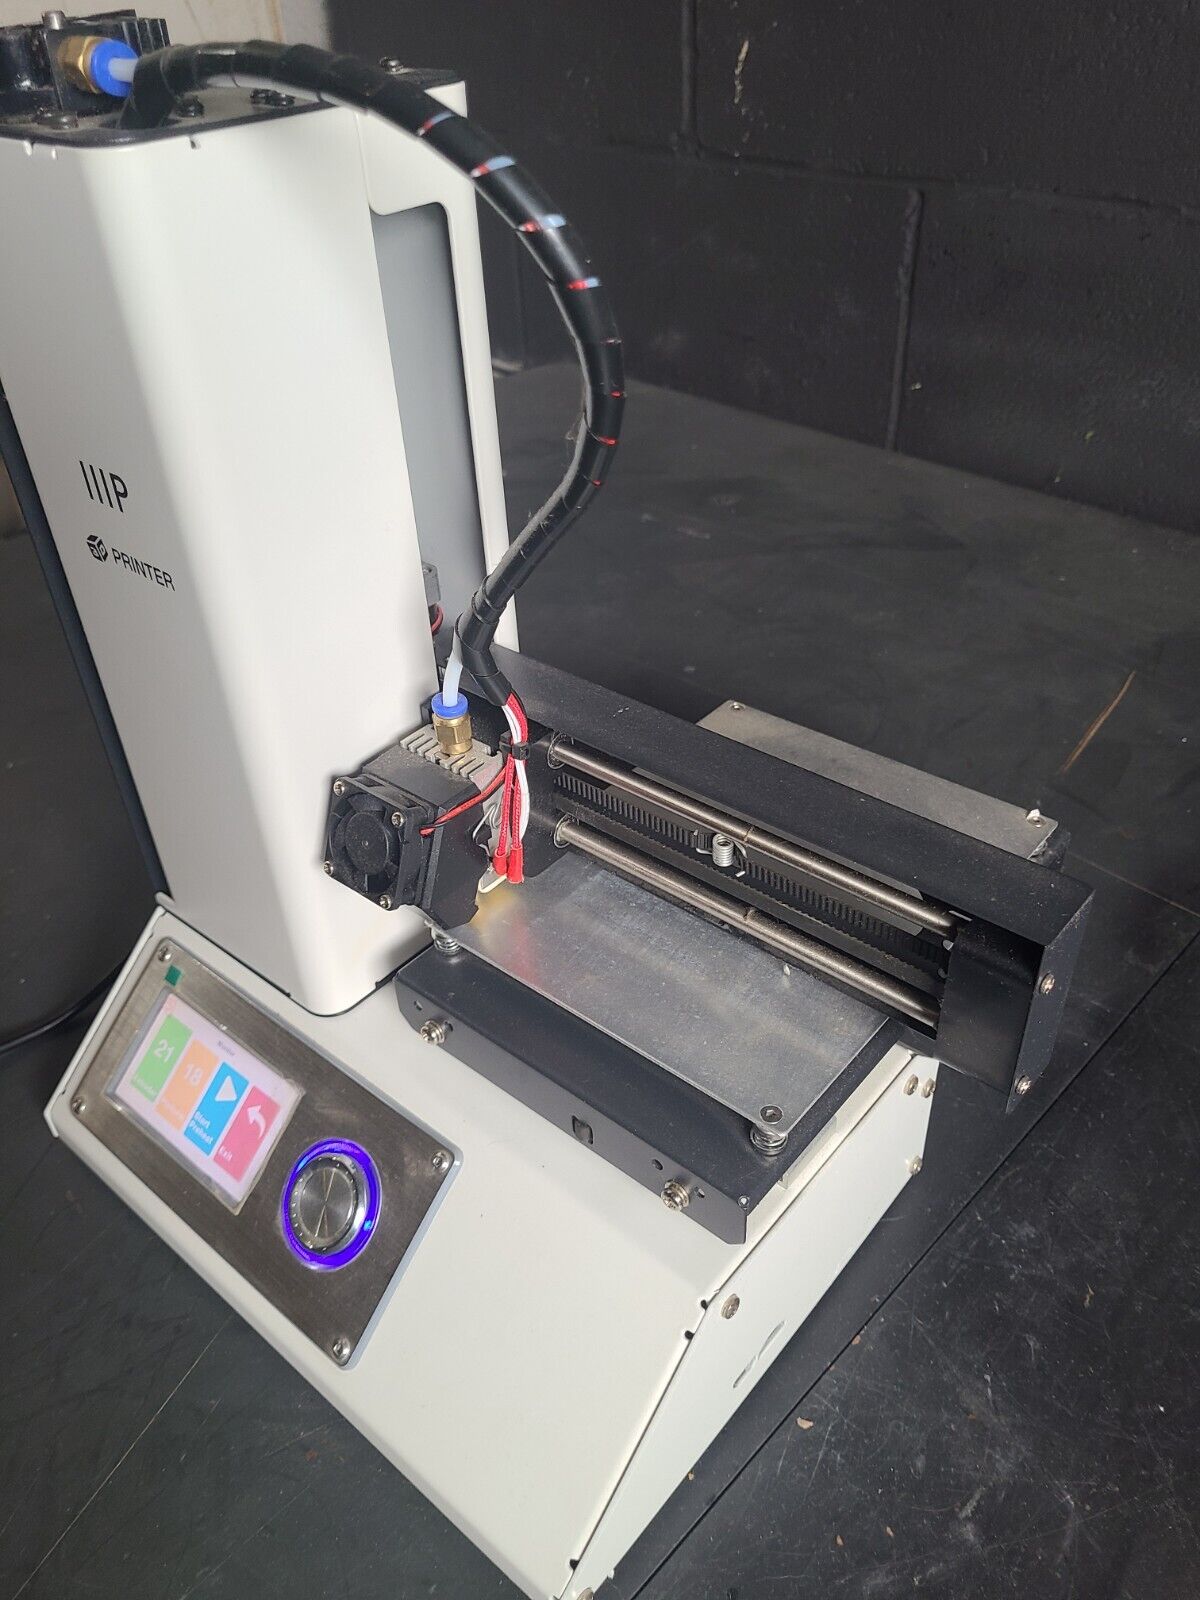 Monoprice Maker Select Mini 3D Printer MP 200 V2 - FDM 3D Printer, Works Great